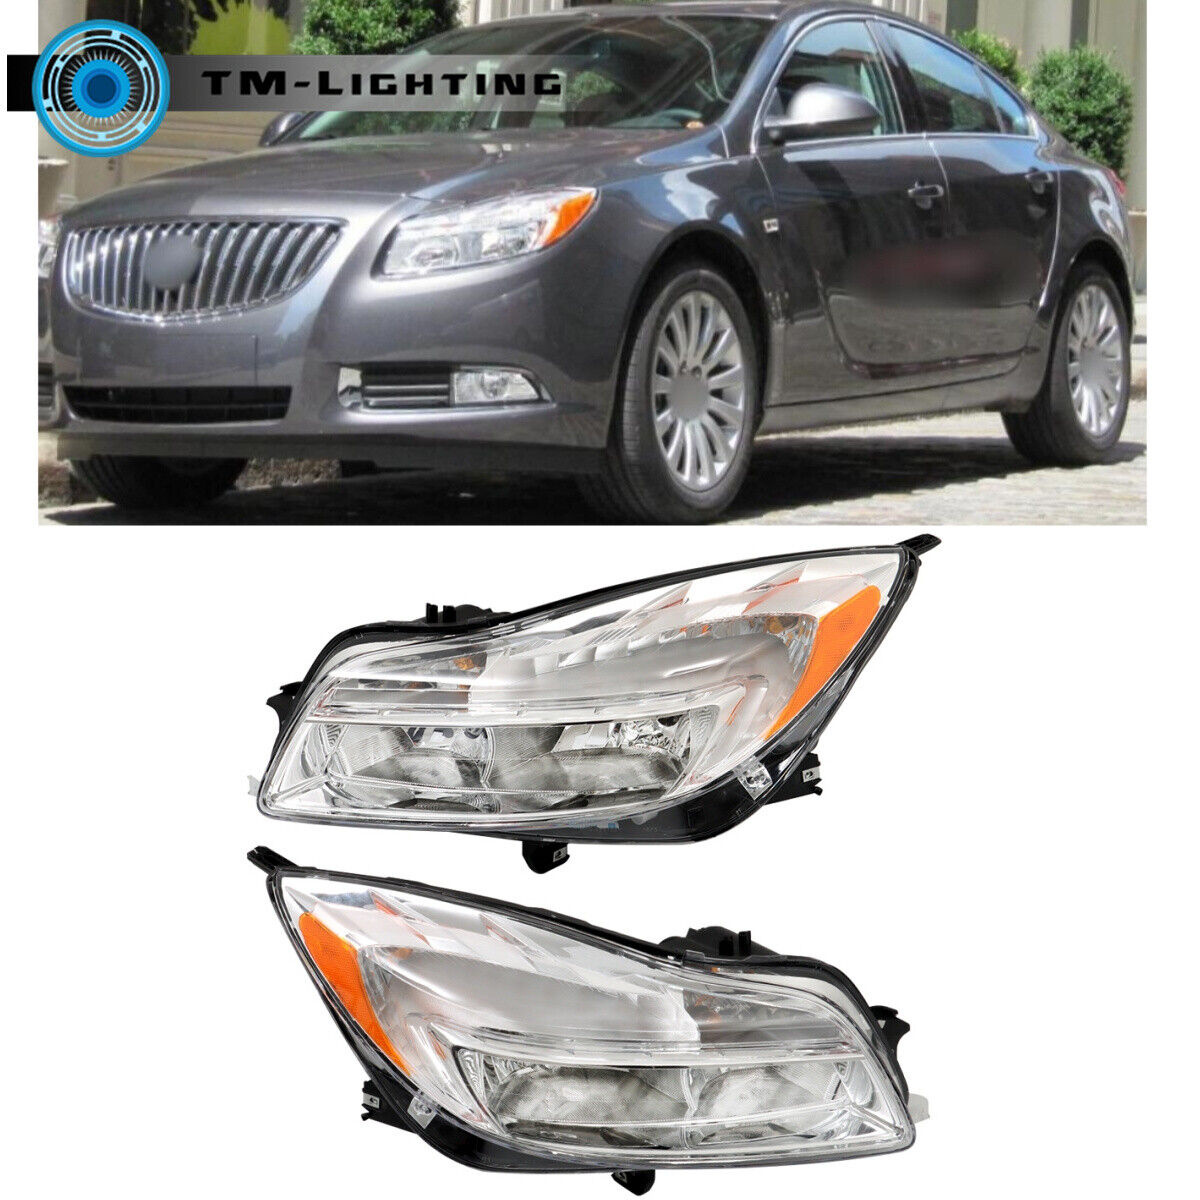 Headlight Headlamp Assembly For Buick Regal 2011 2012 2013 Passenger&Driver Side